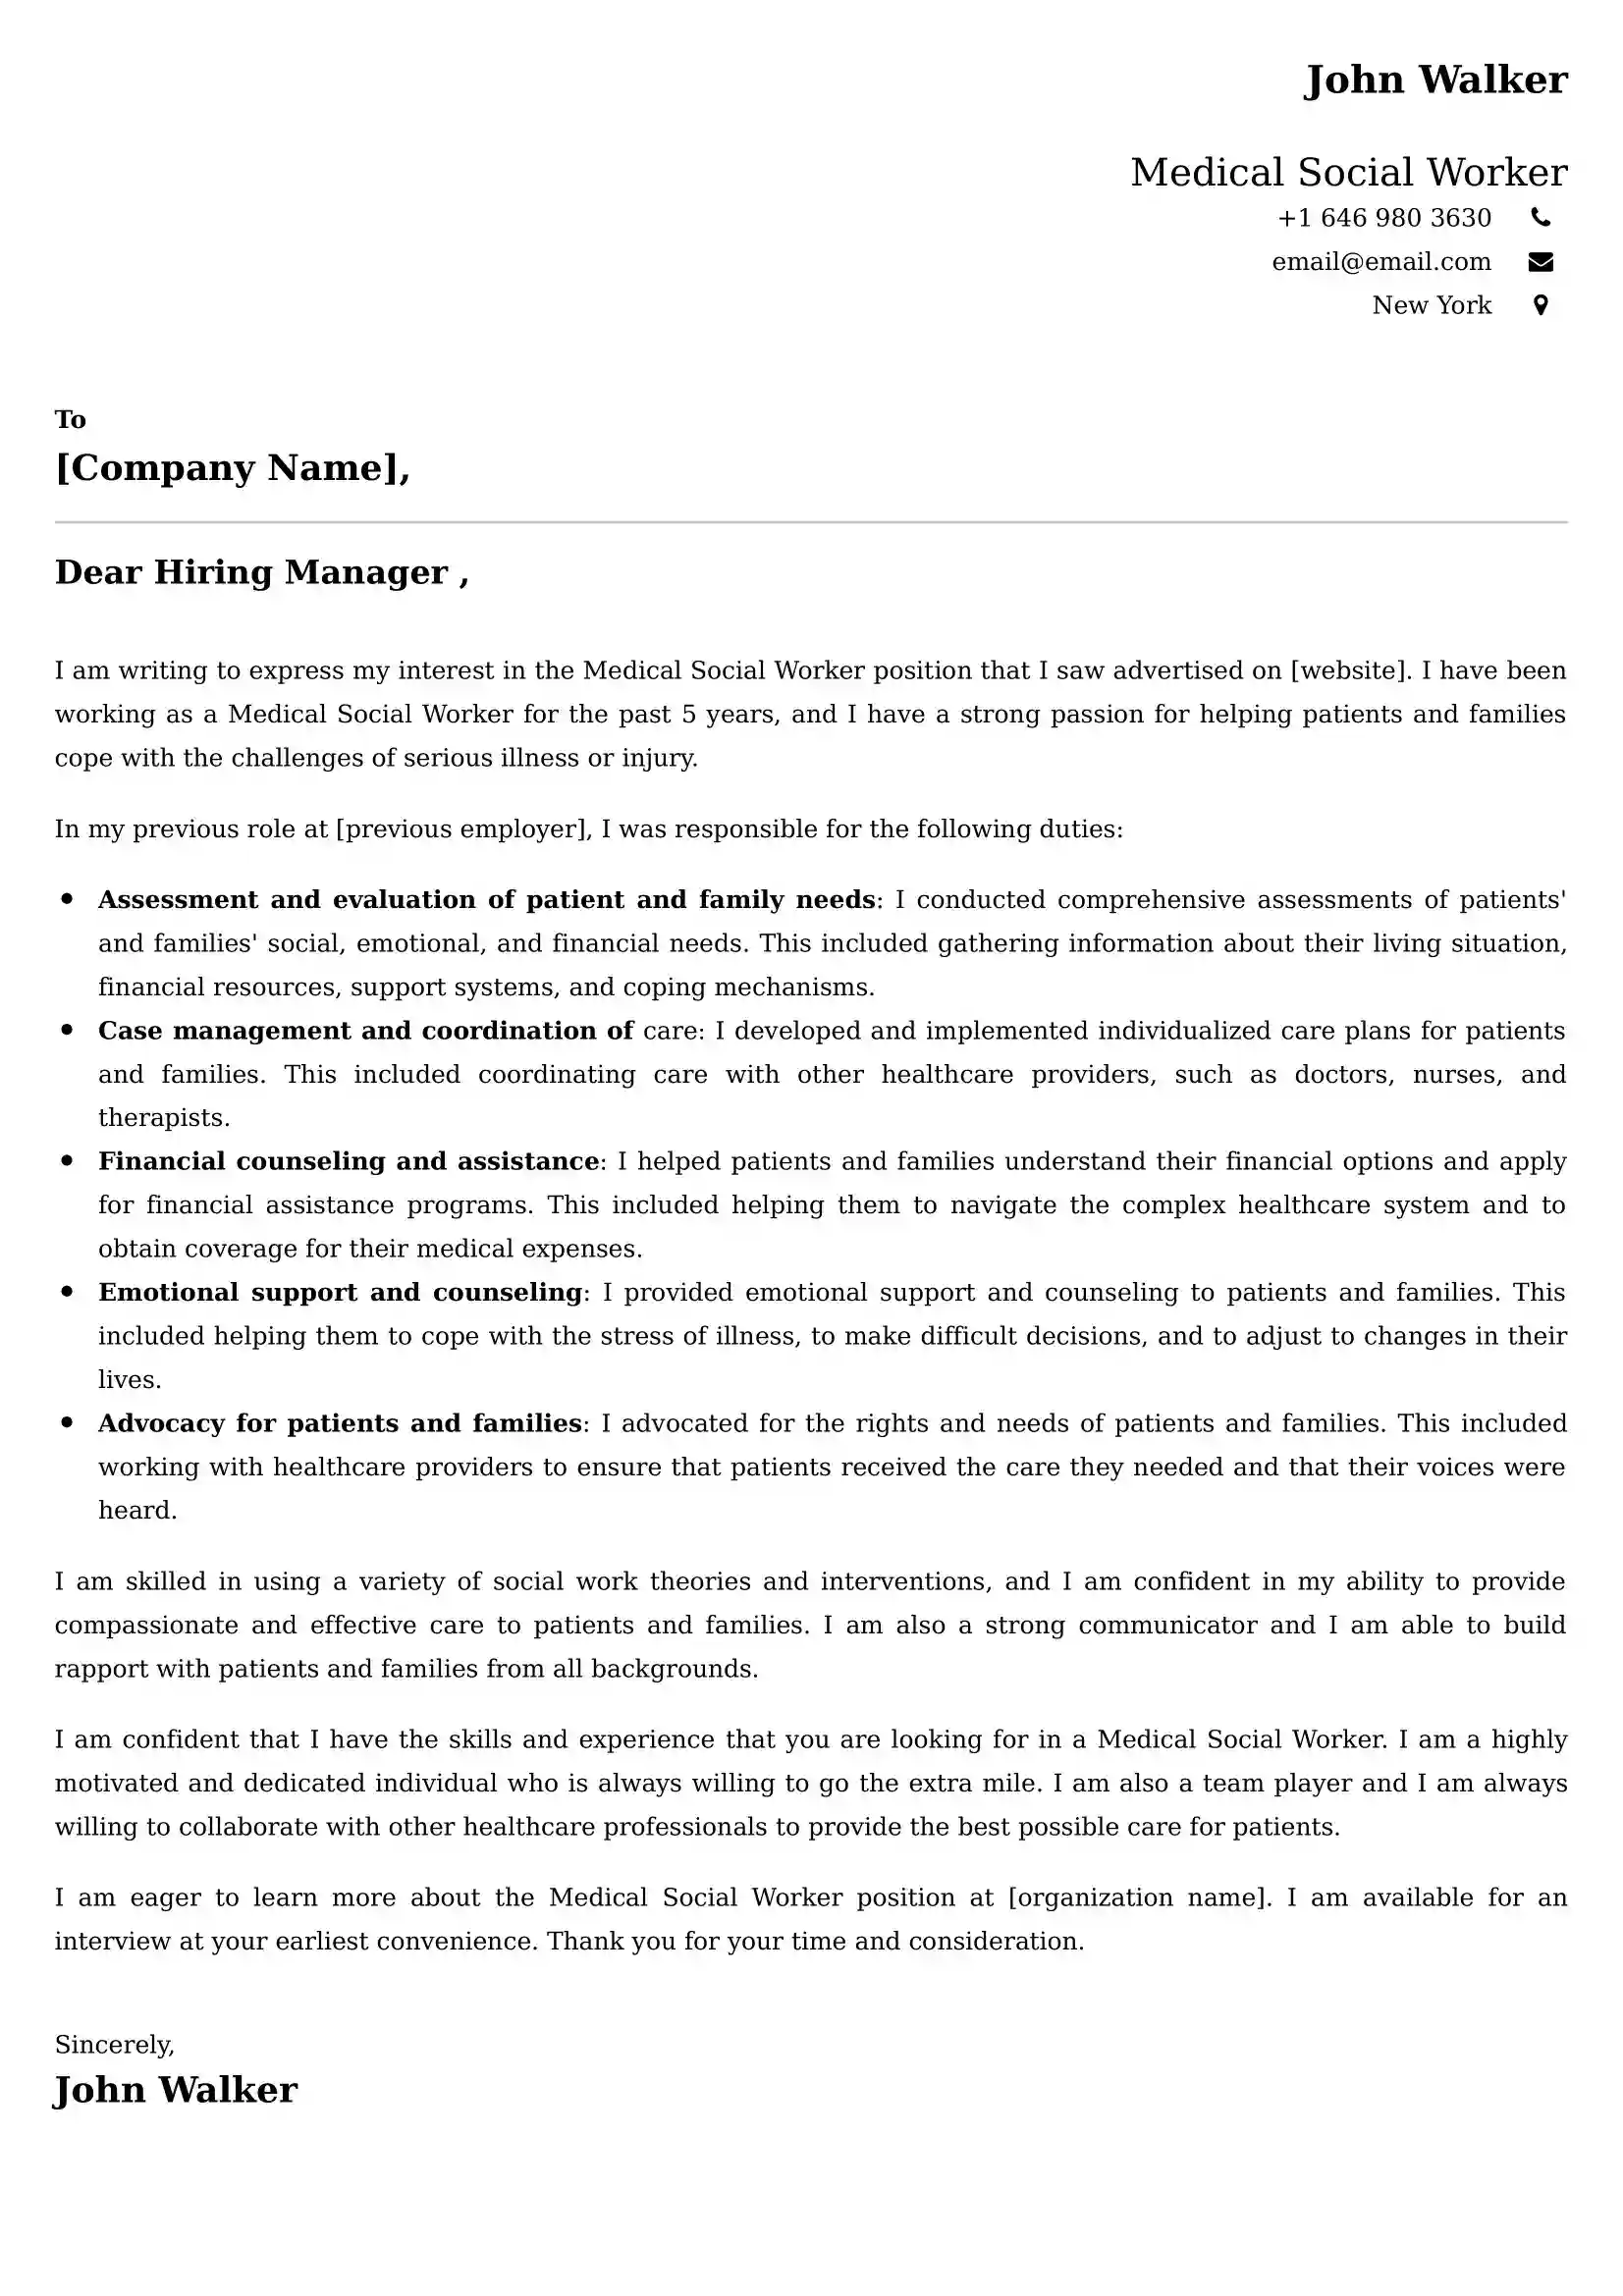 Medical Social Worker Cover Letter Sample